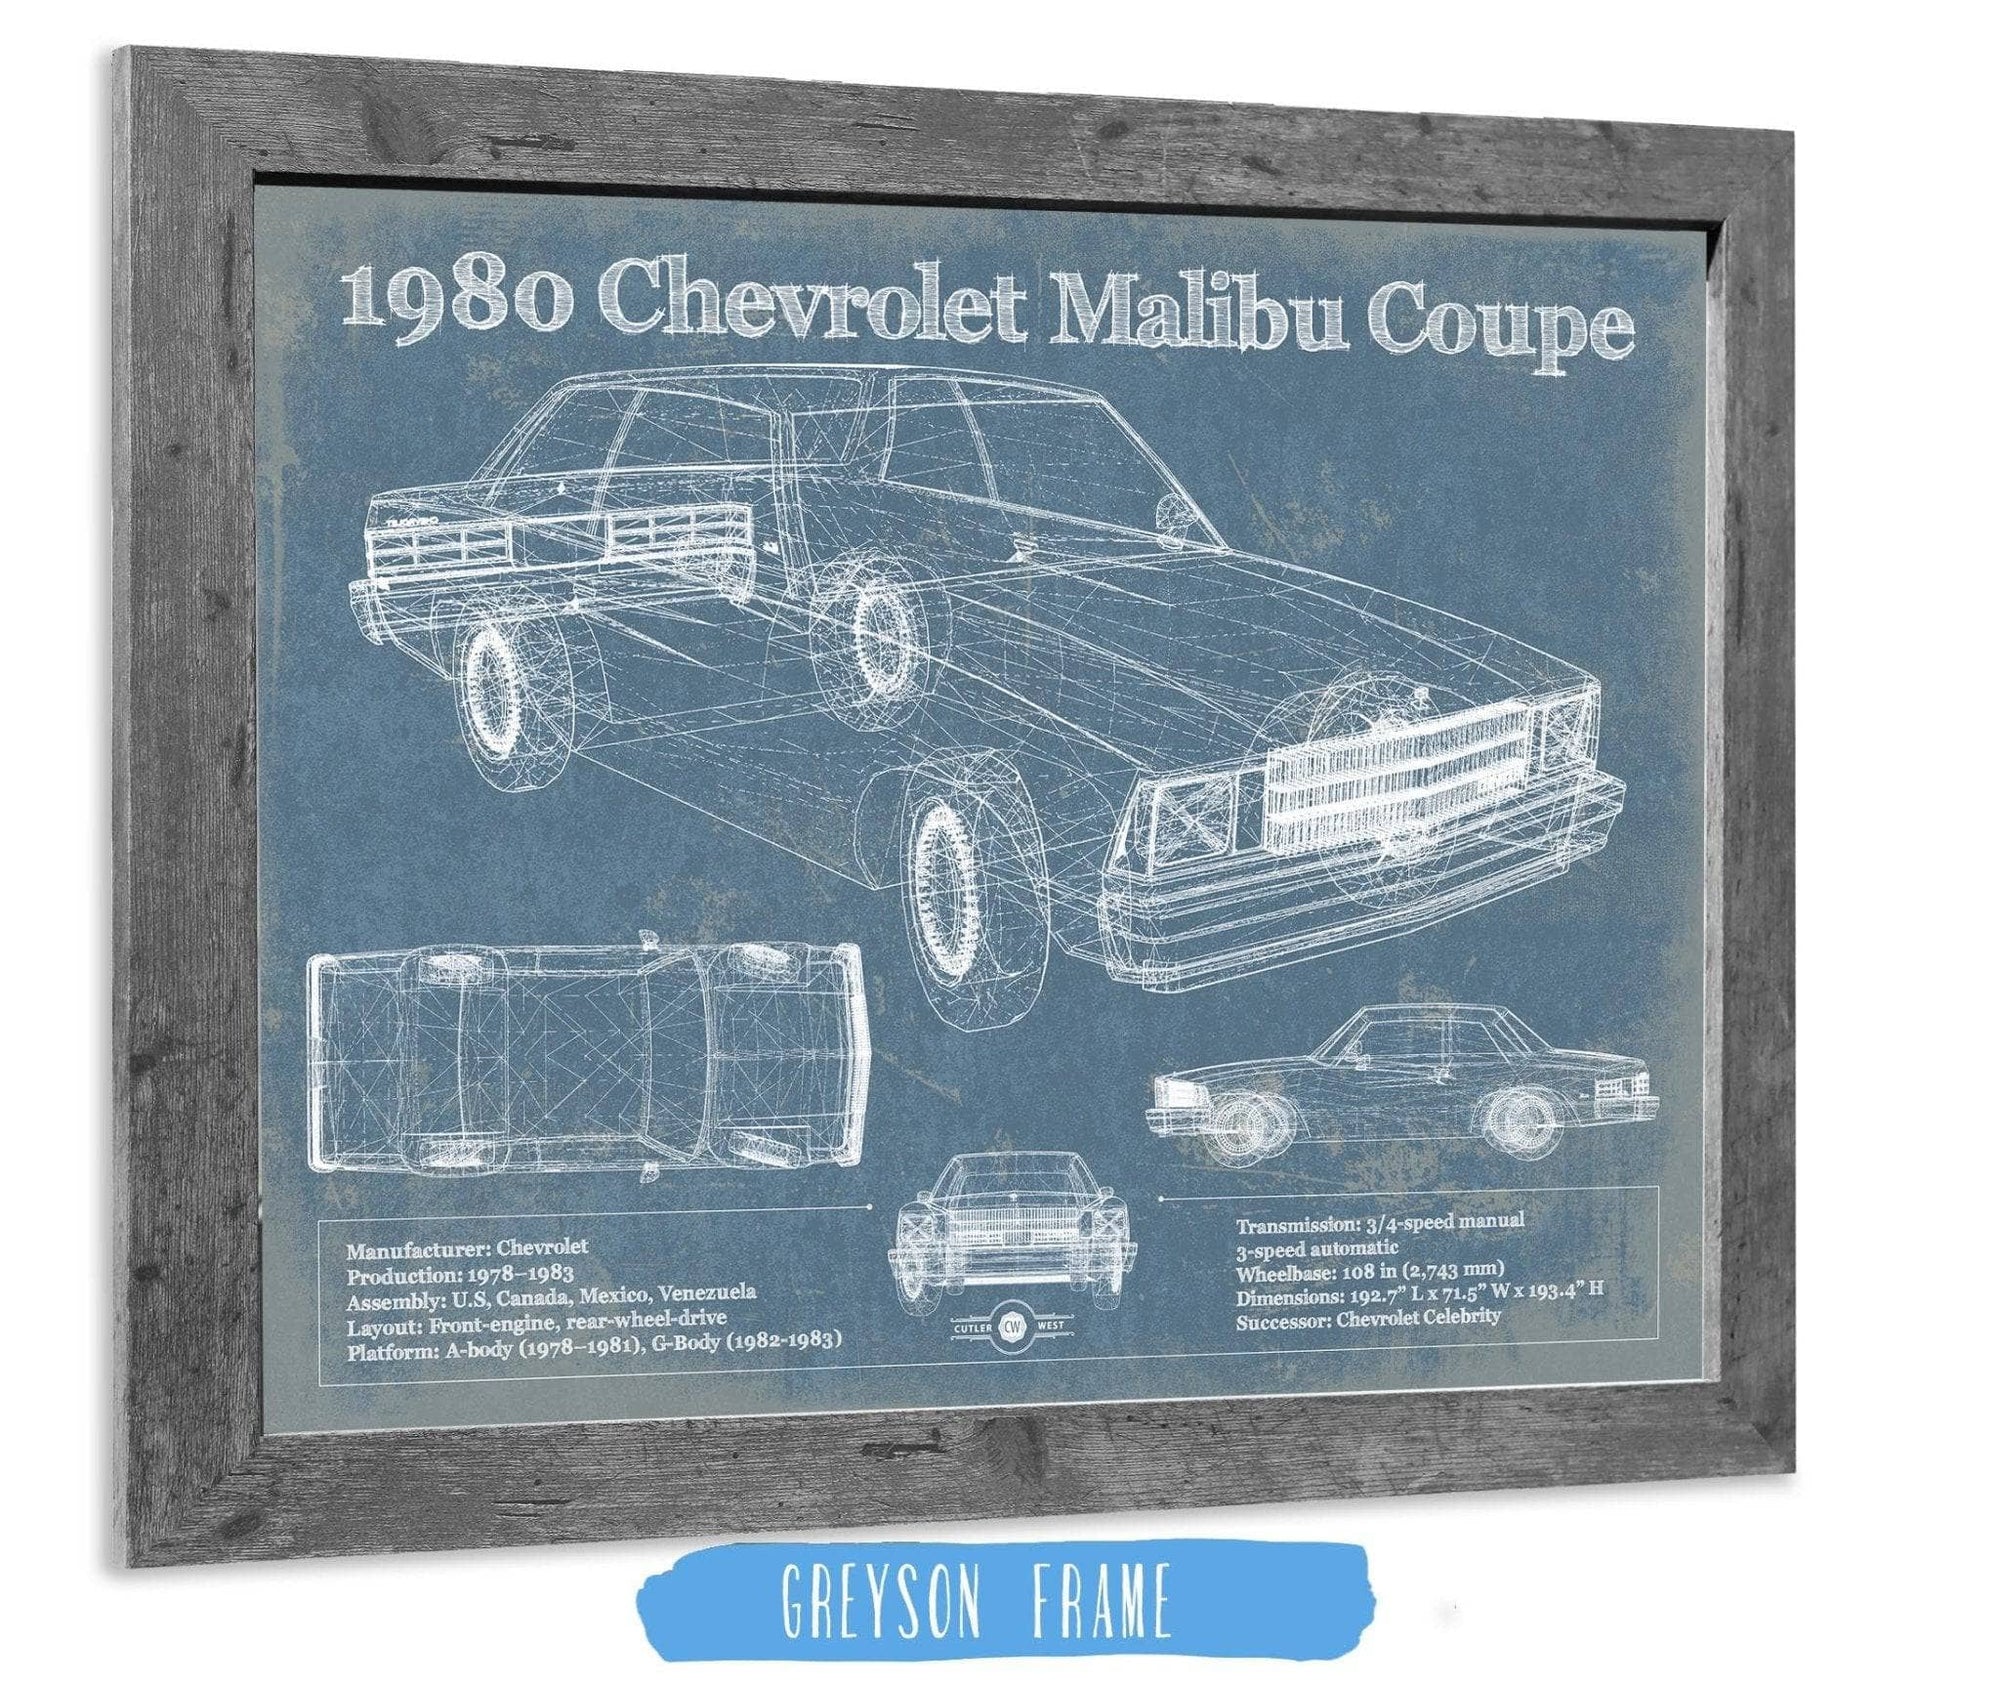 Cutler West Chevrolet Collection 14" x 11" / Greyson Frame 1980 Chevrolet Malibu Coupe Blueprint Vintage Auto Patent Print 140070